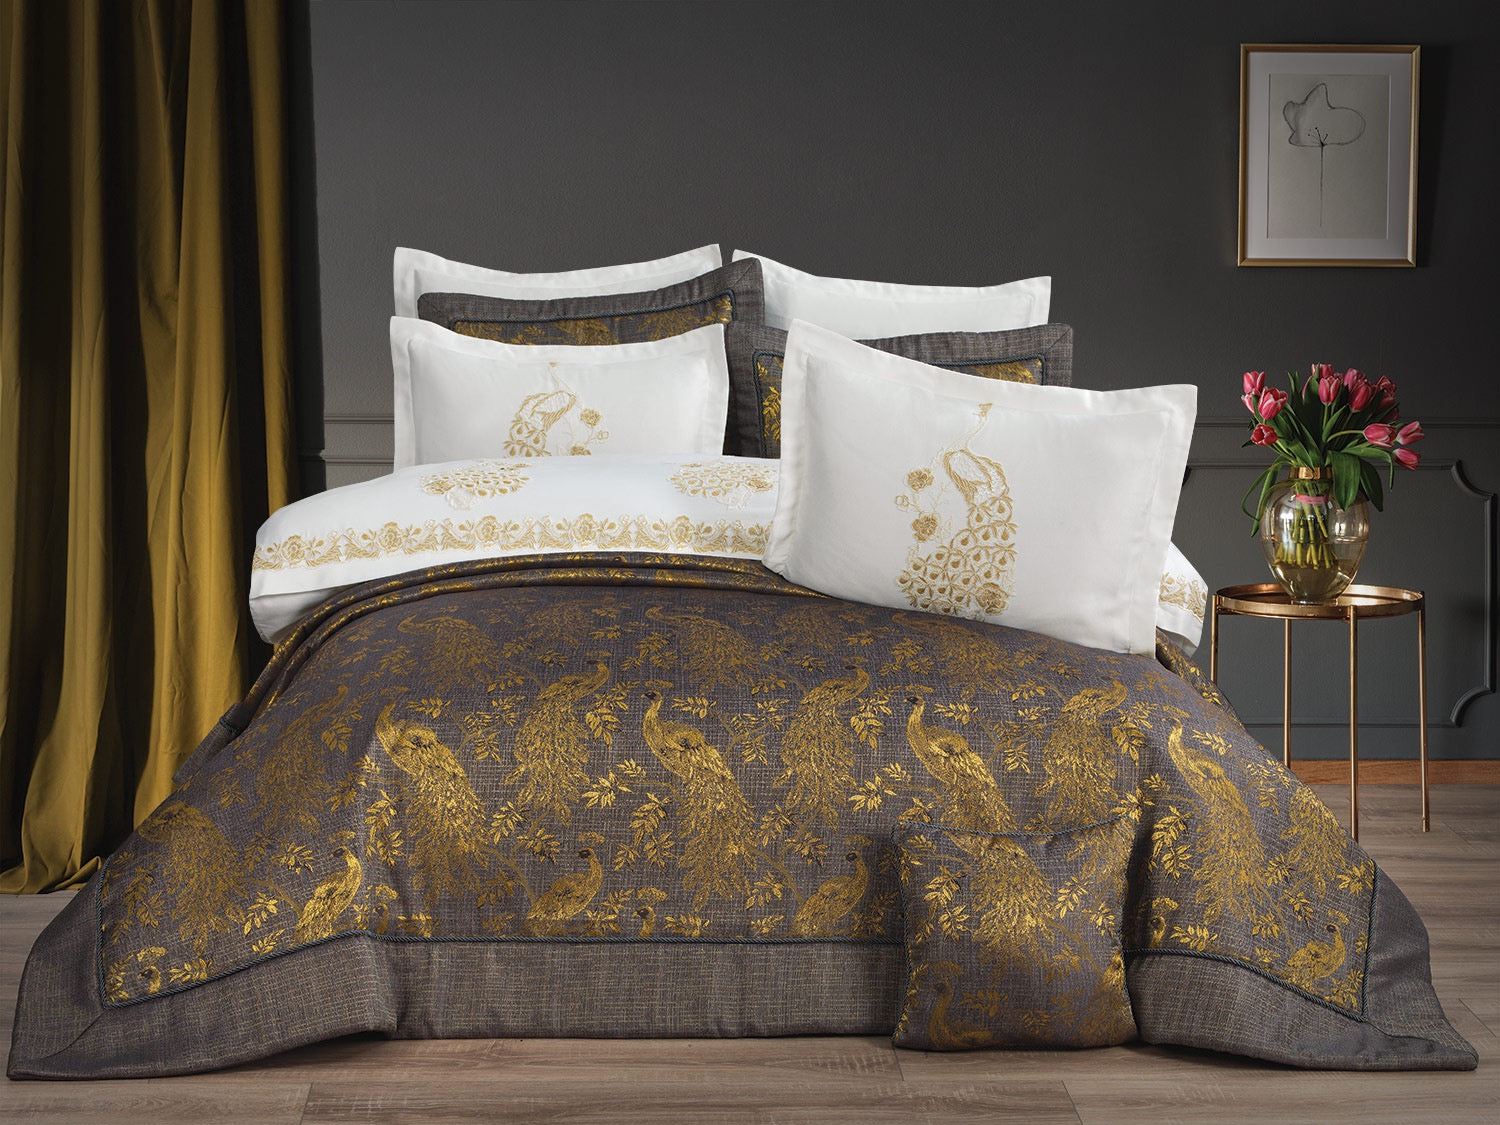 Luxury Peacock Bedspread